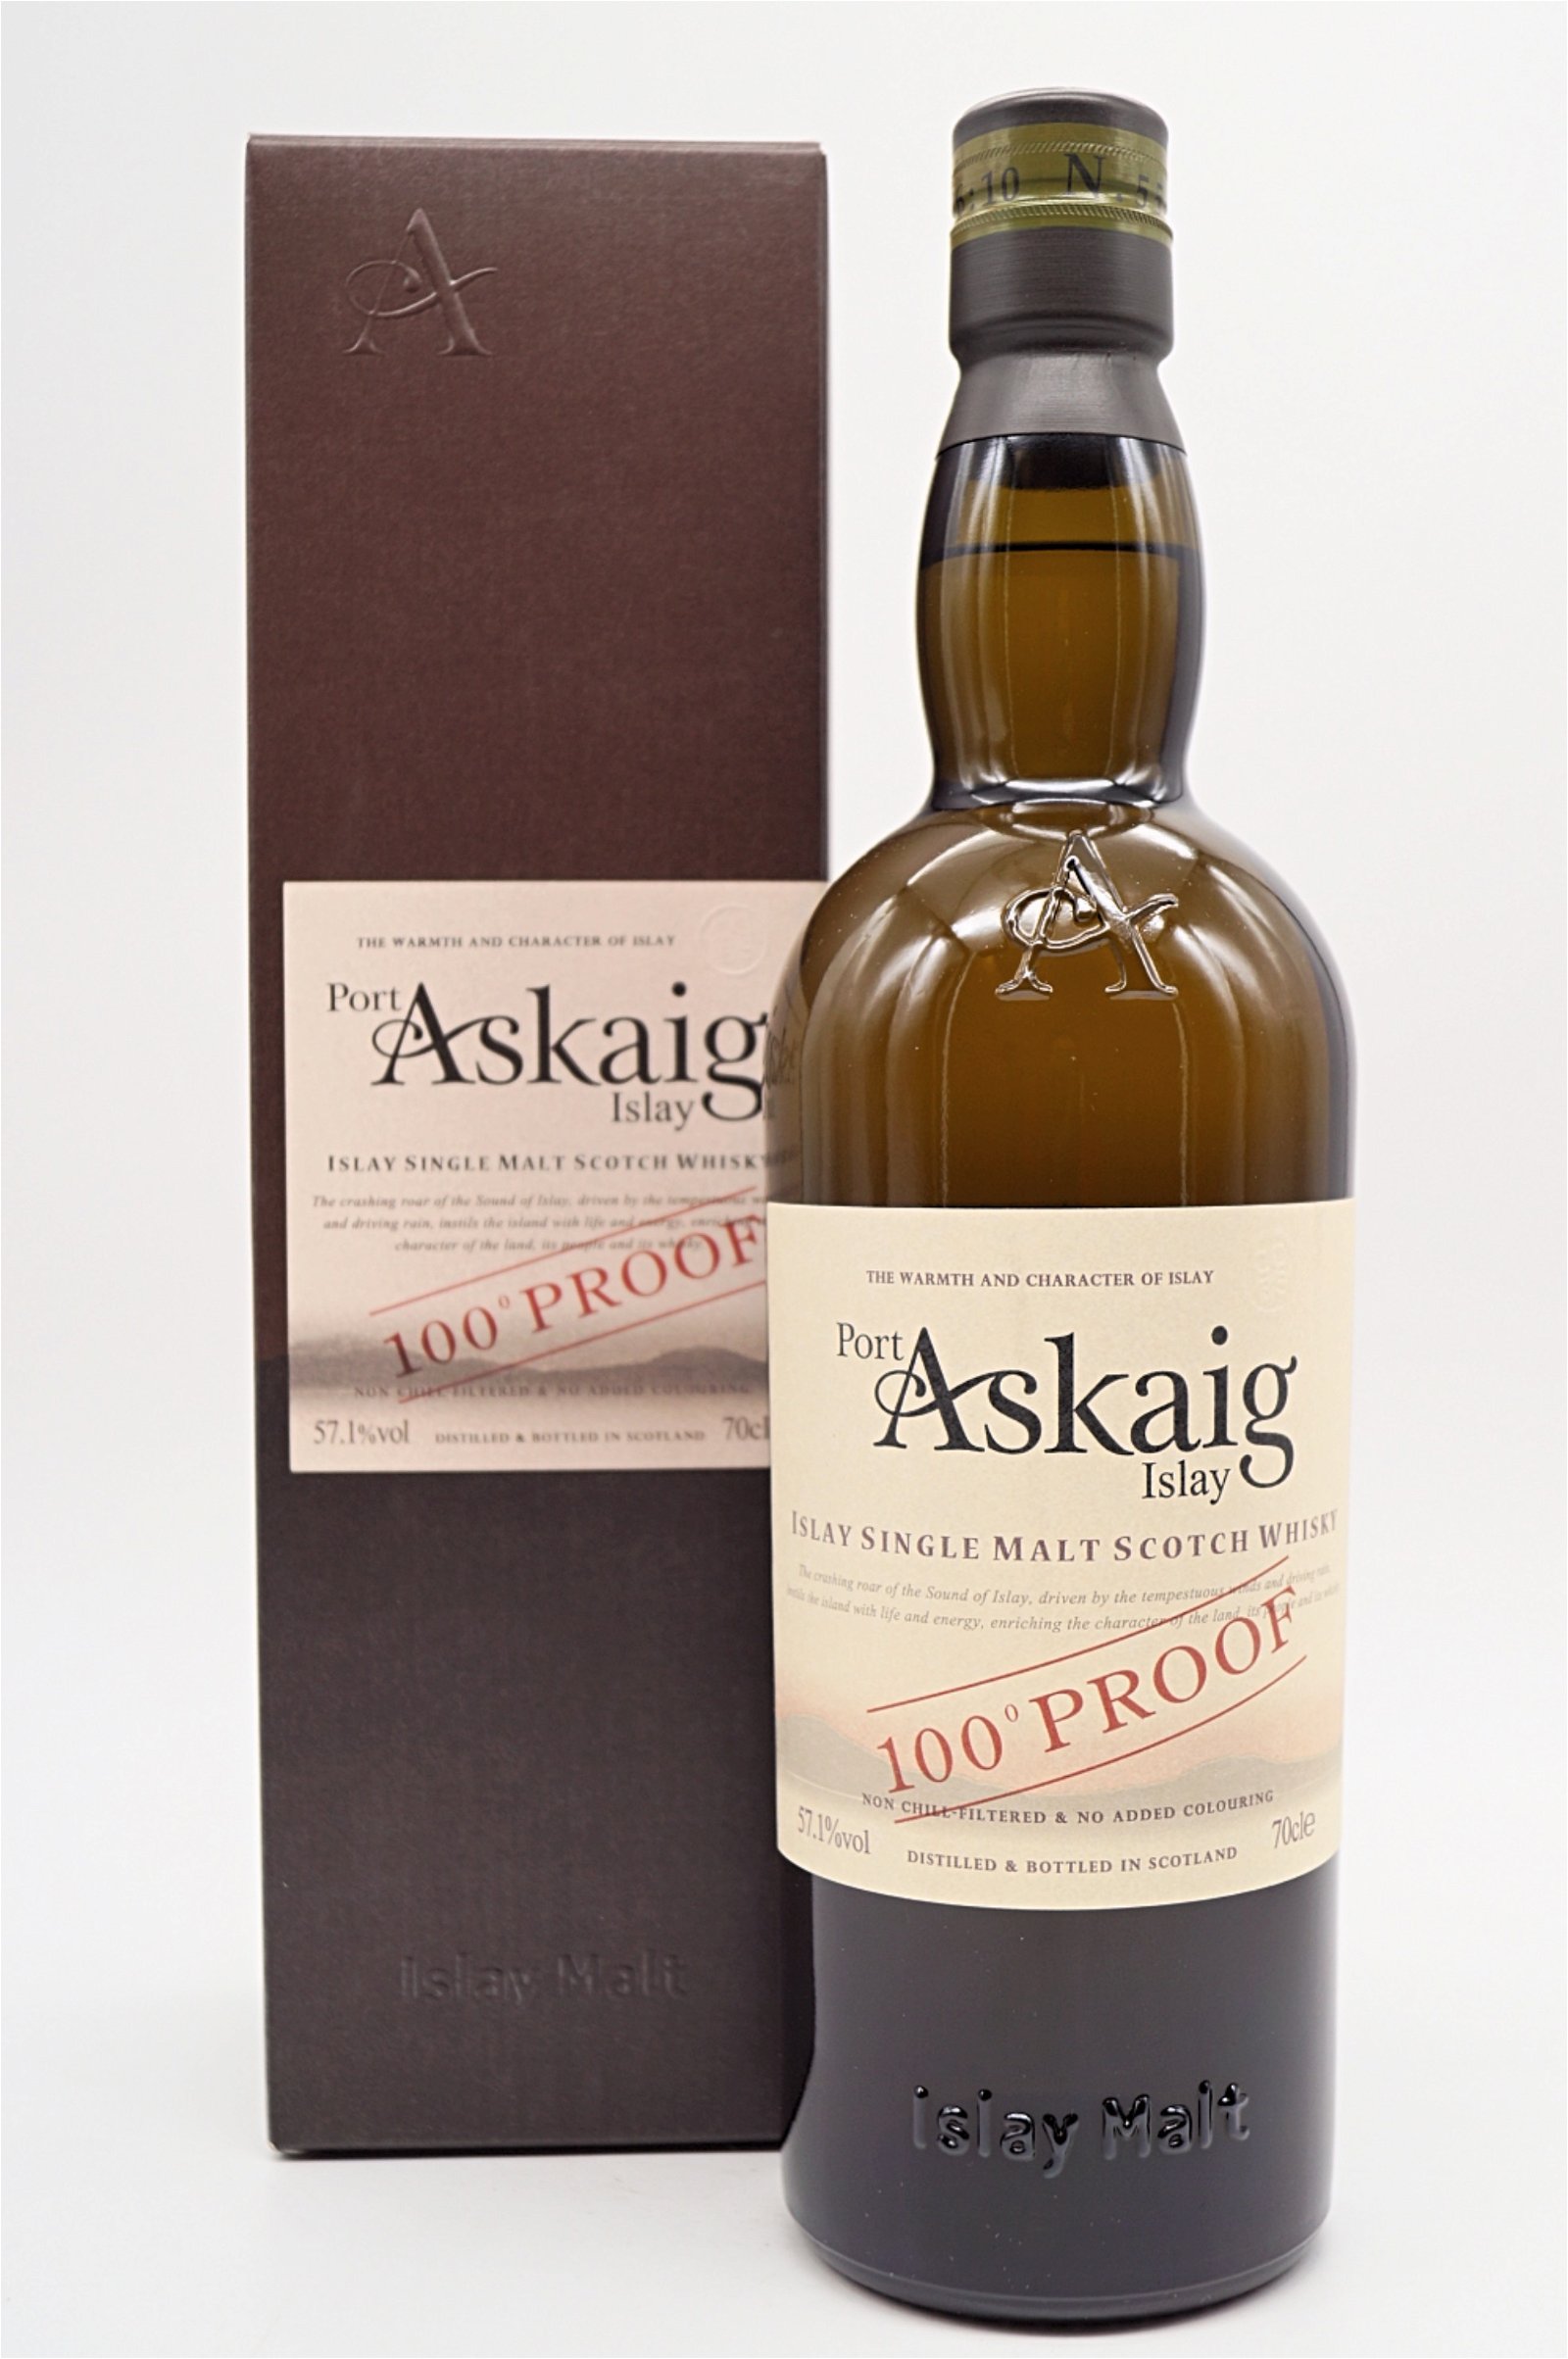 Port Askaig 100 Proof Single Malt Scotch Whisky